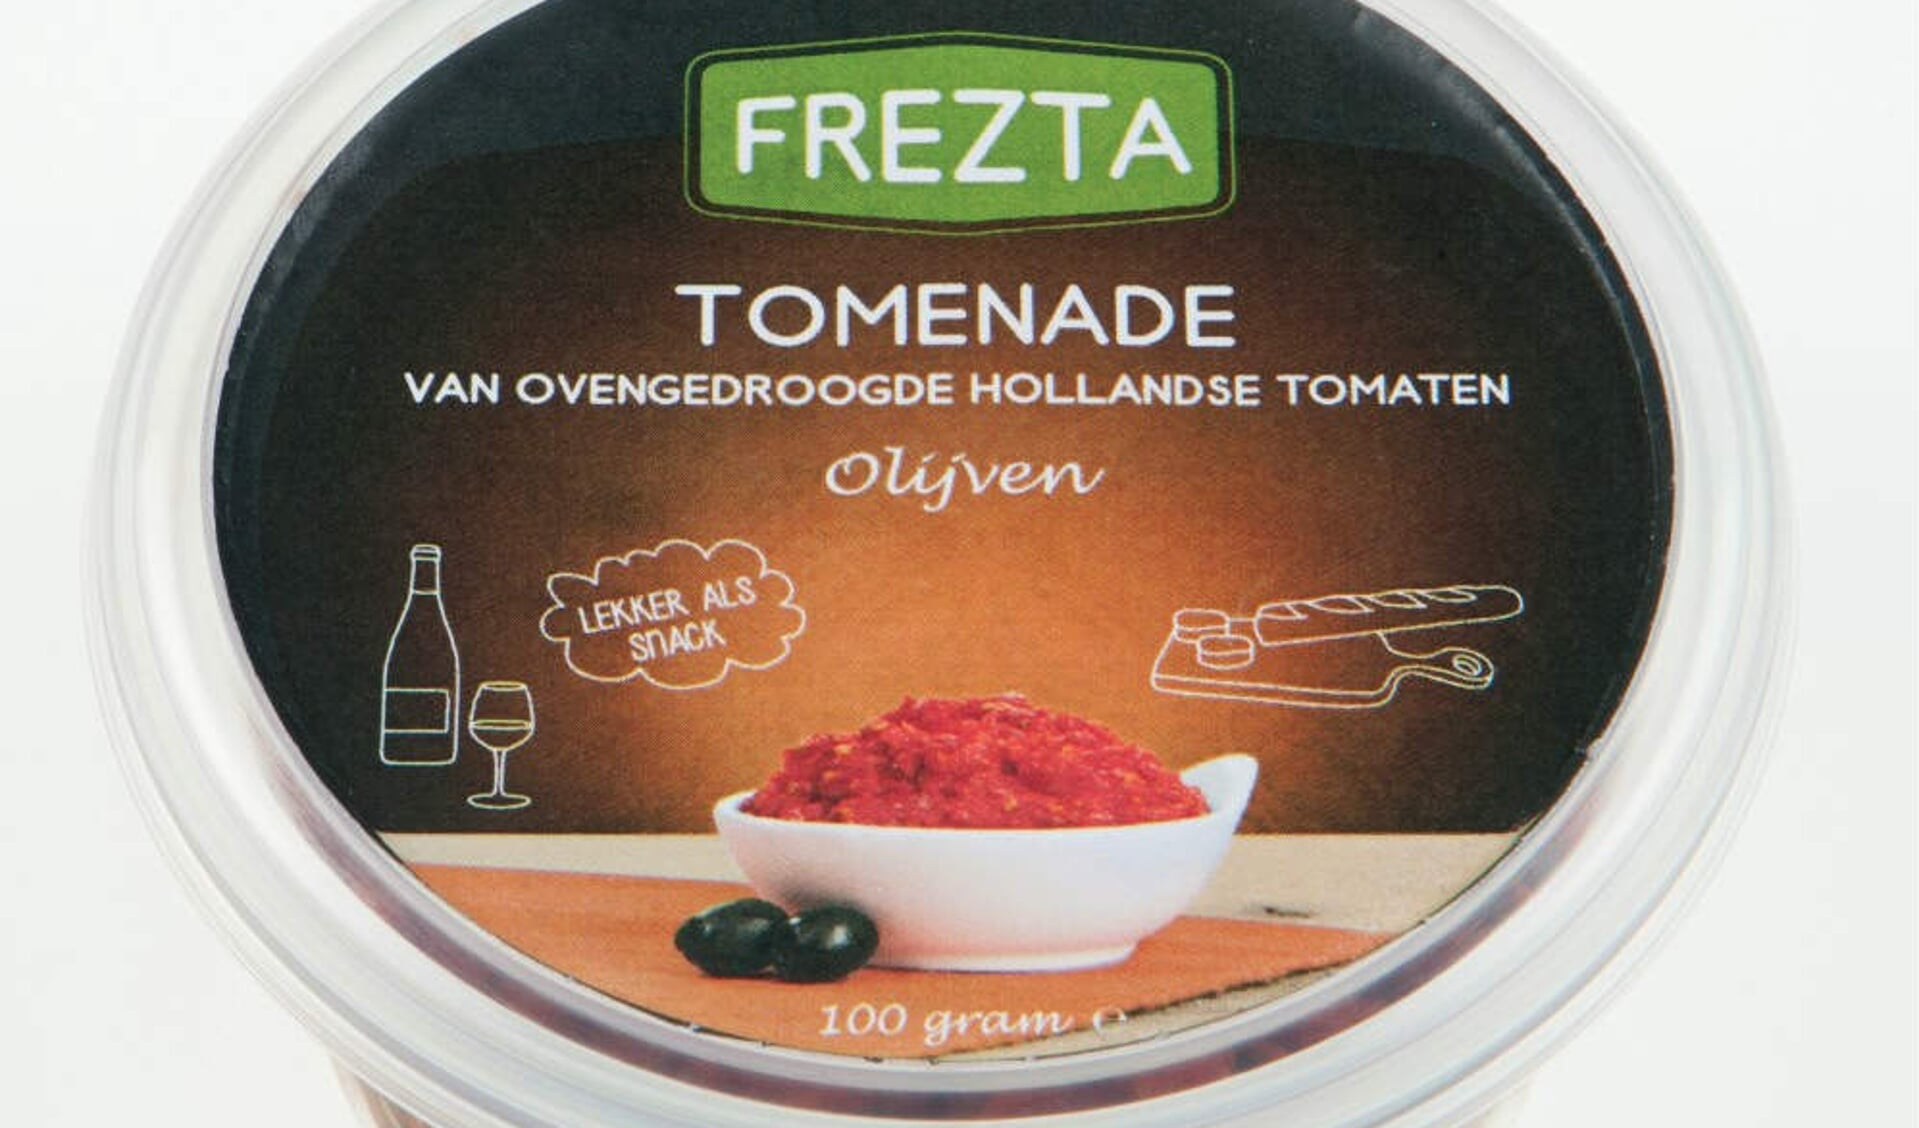 Hollandse ovengedroogde tomaten